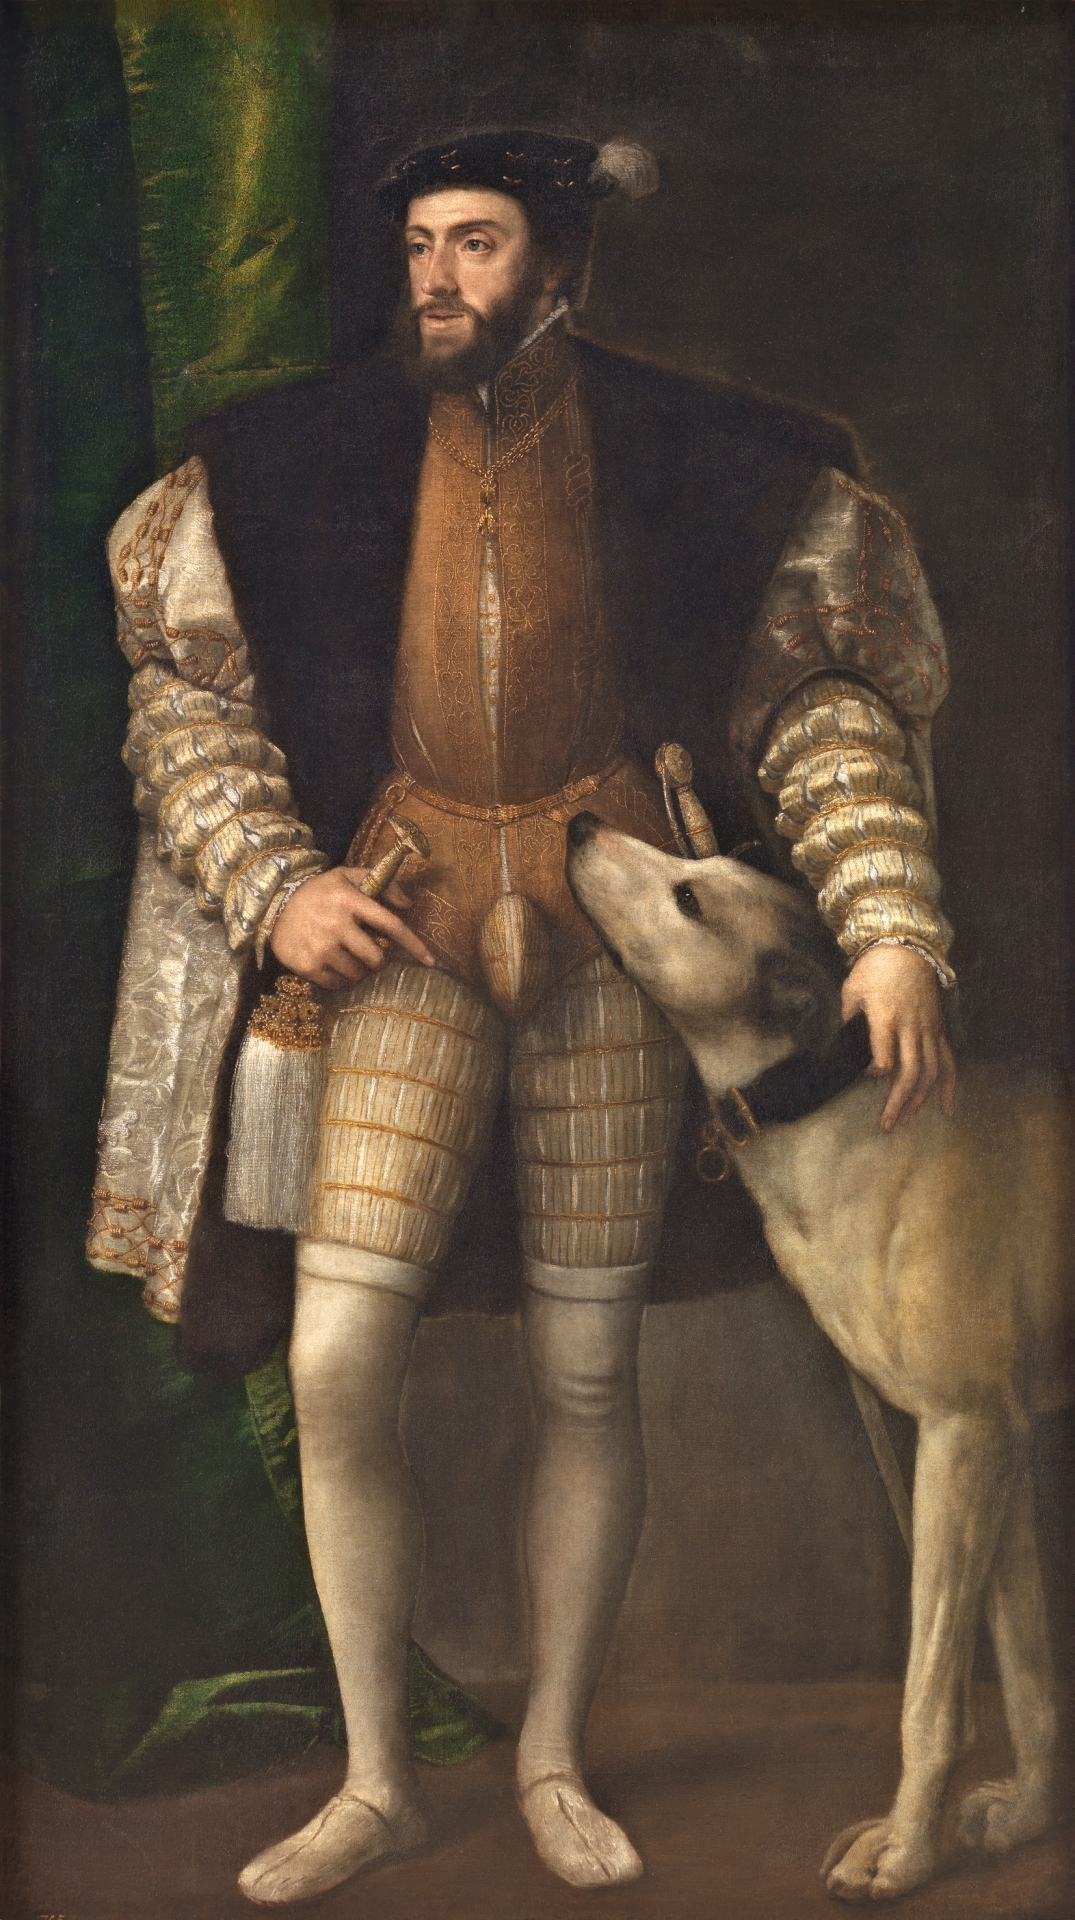 'The Emperor Charles V with a Dog,' Titian, 1533. Courtesy of Museo Nacional del Prado.